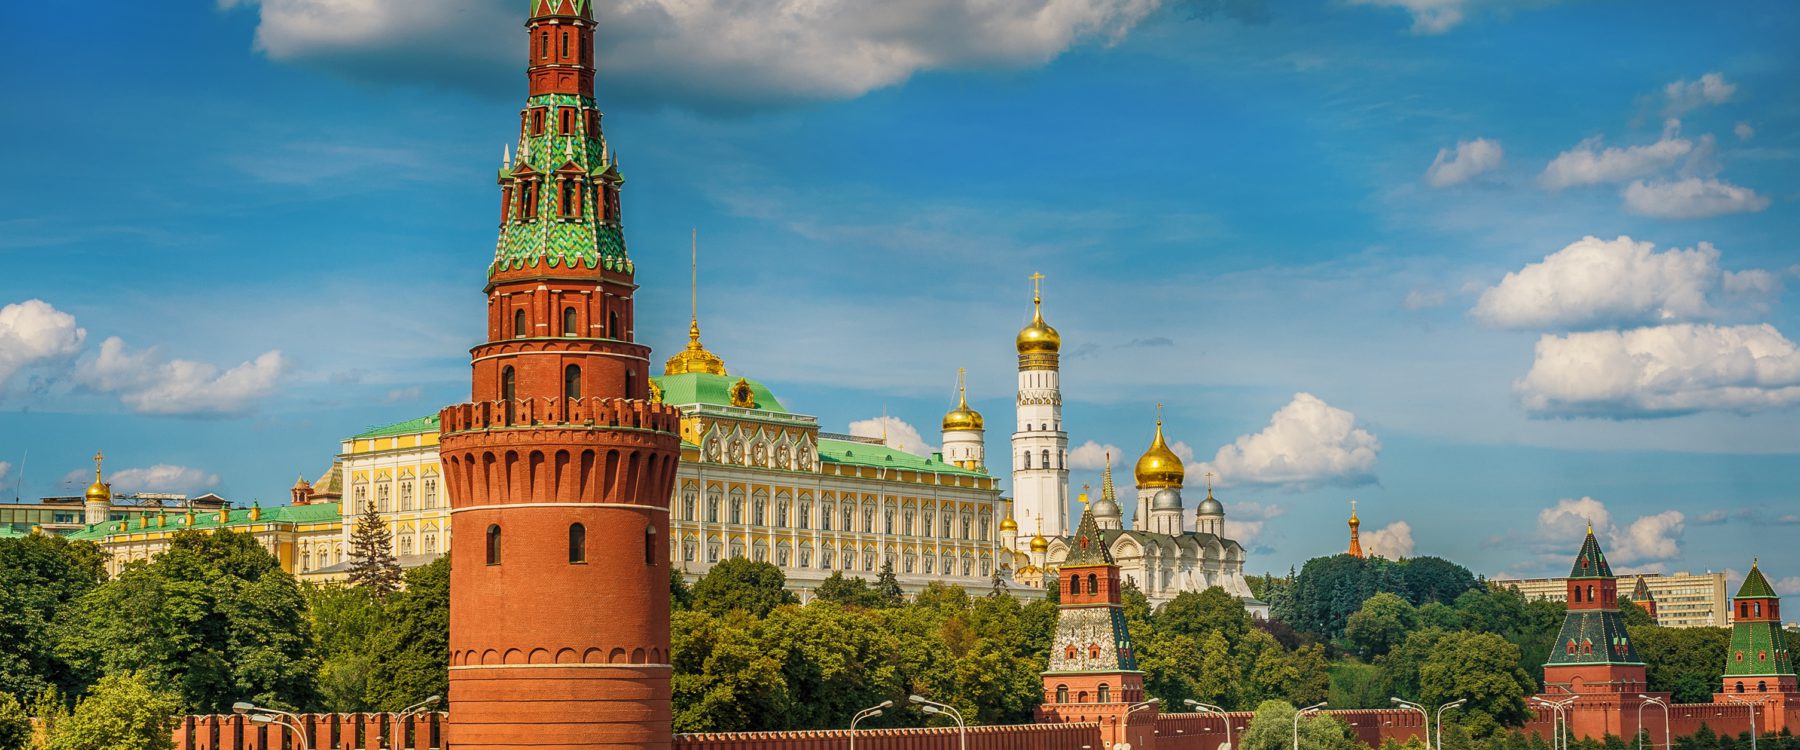 Moscow Kremlin in Russia